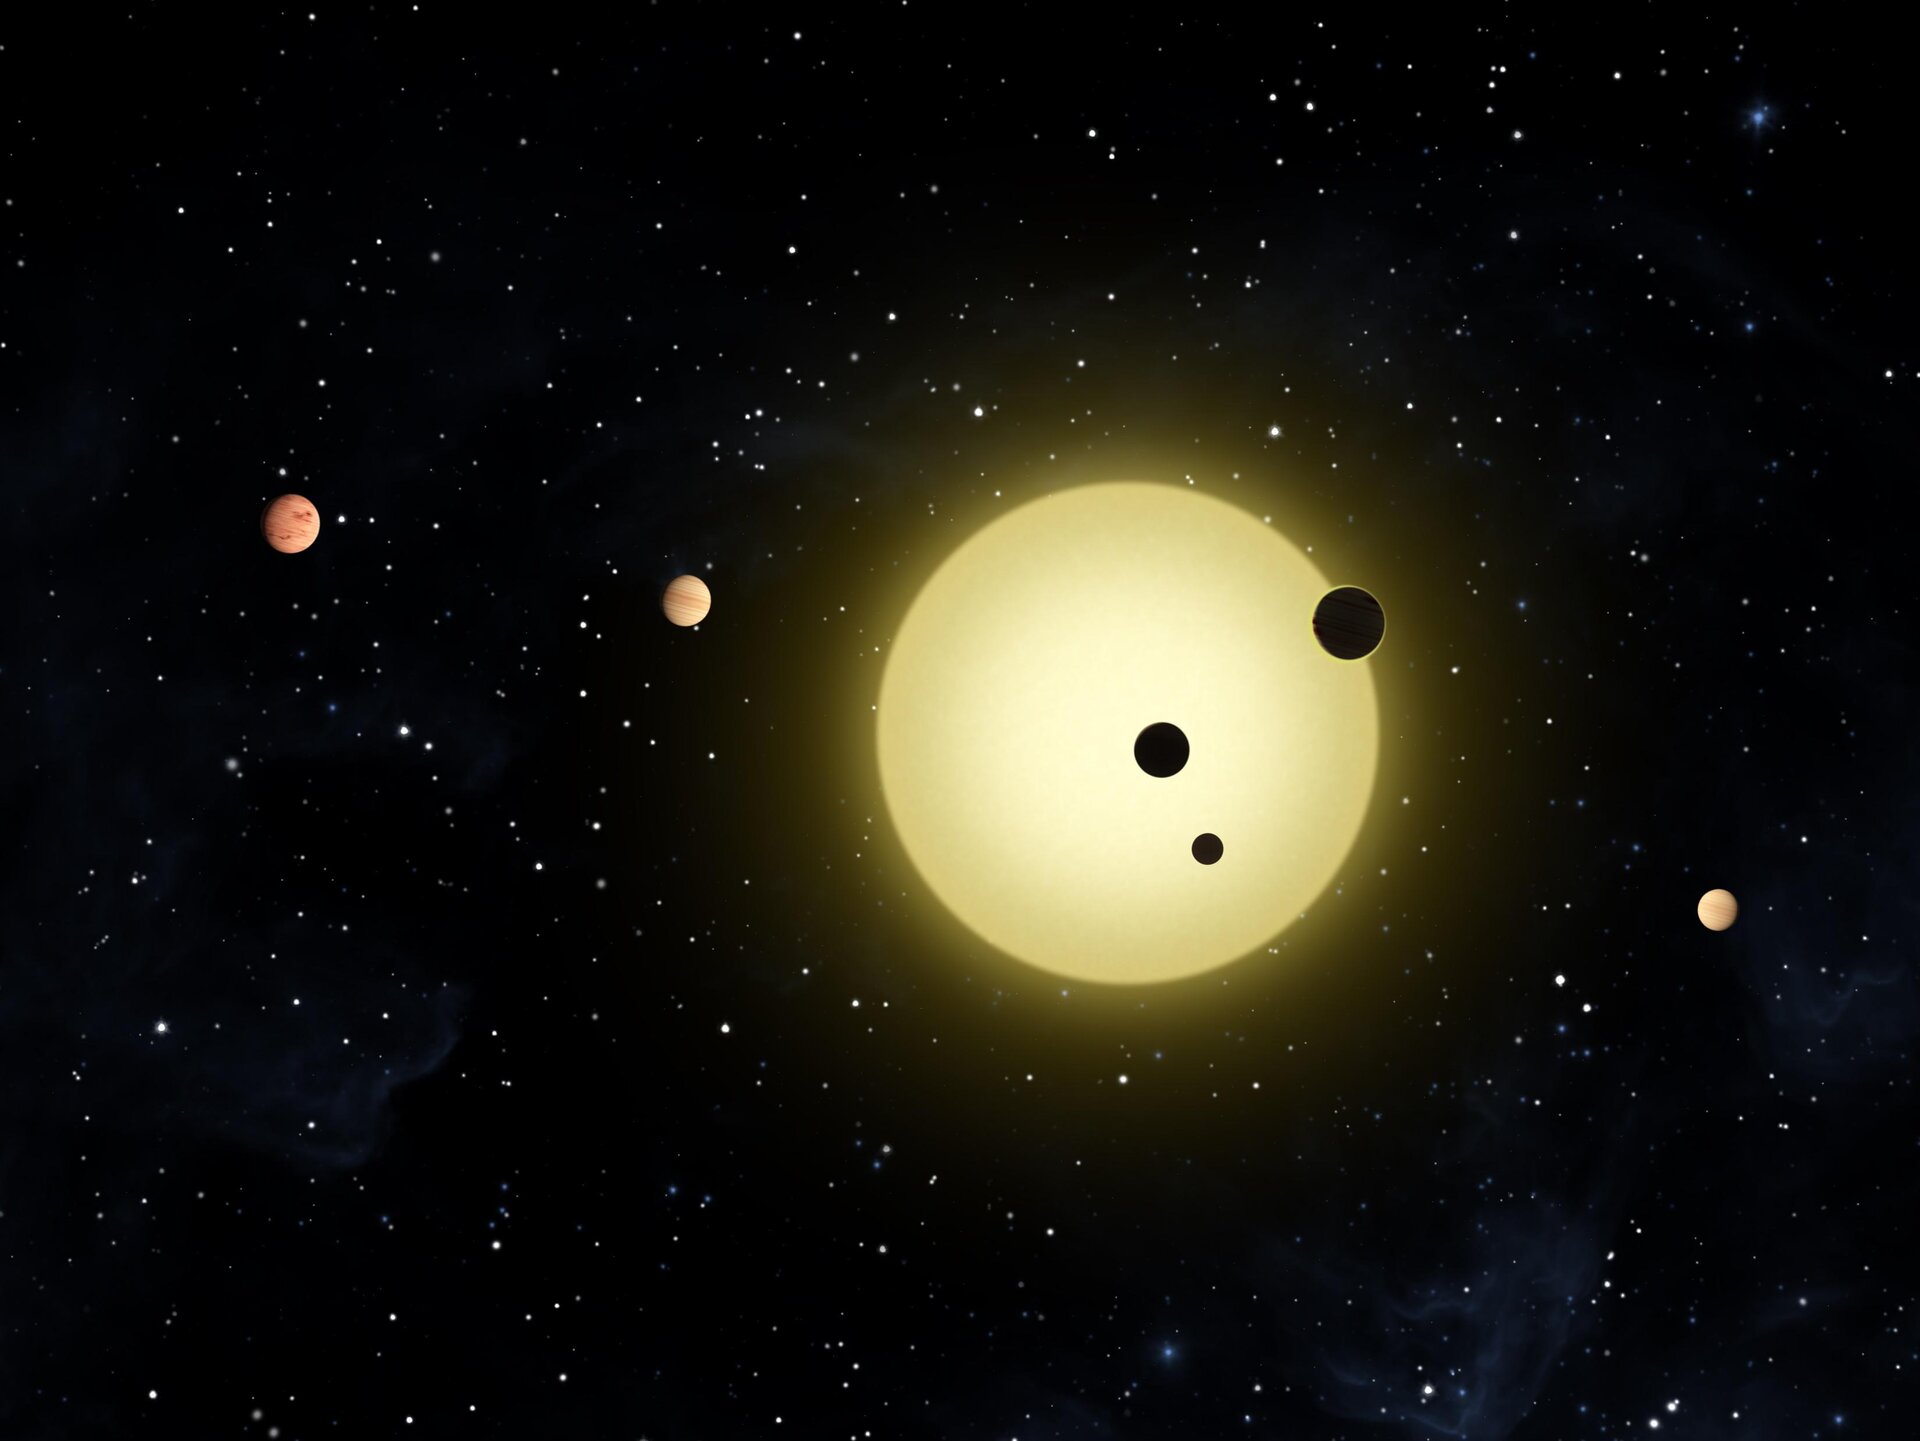 Exoplanets transit method